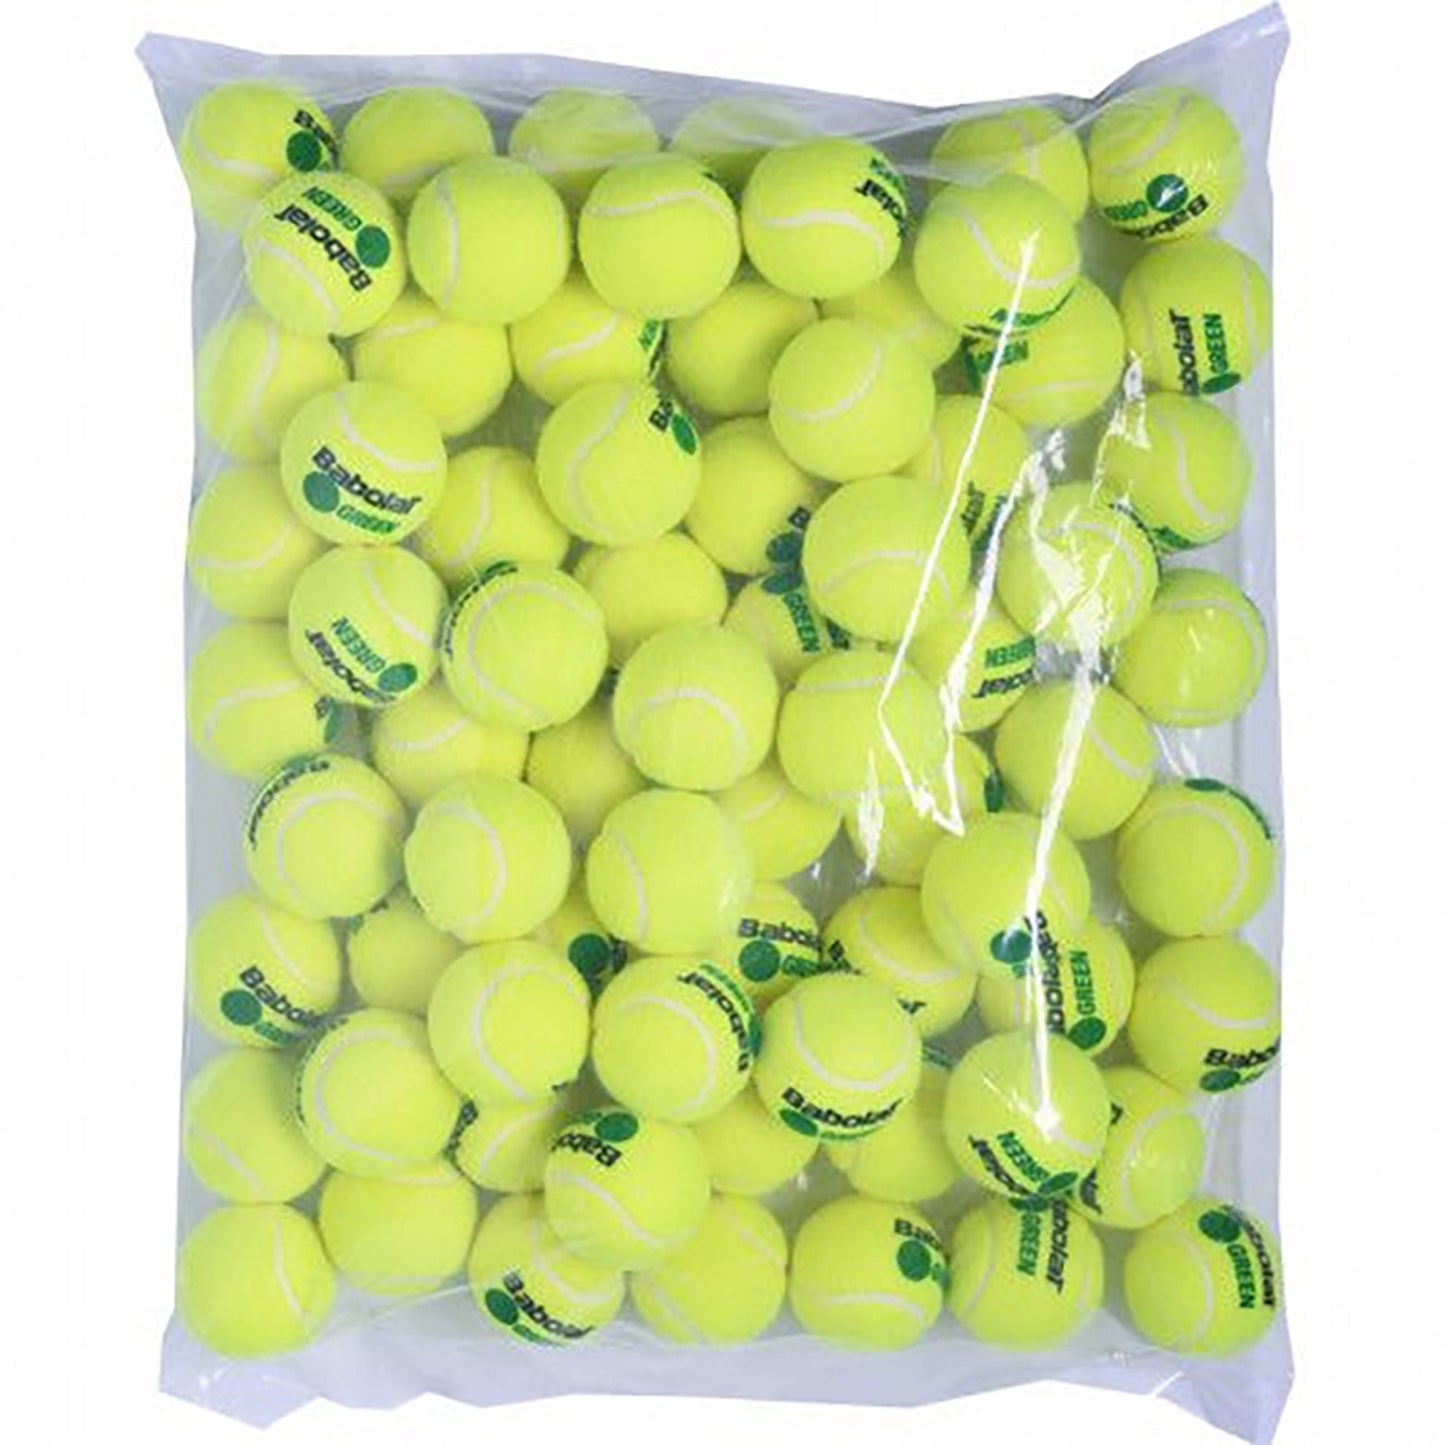 Babolat Green Balls Bag (72 Balls), Yellow - Best Price online Prokicksports.com